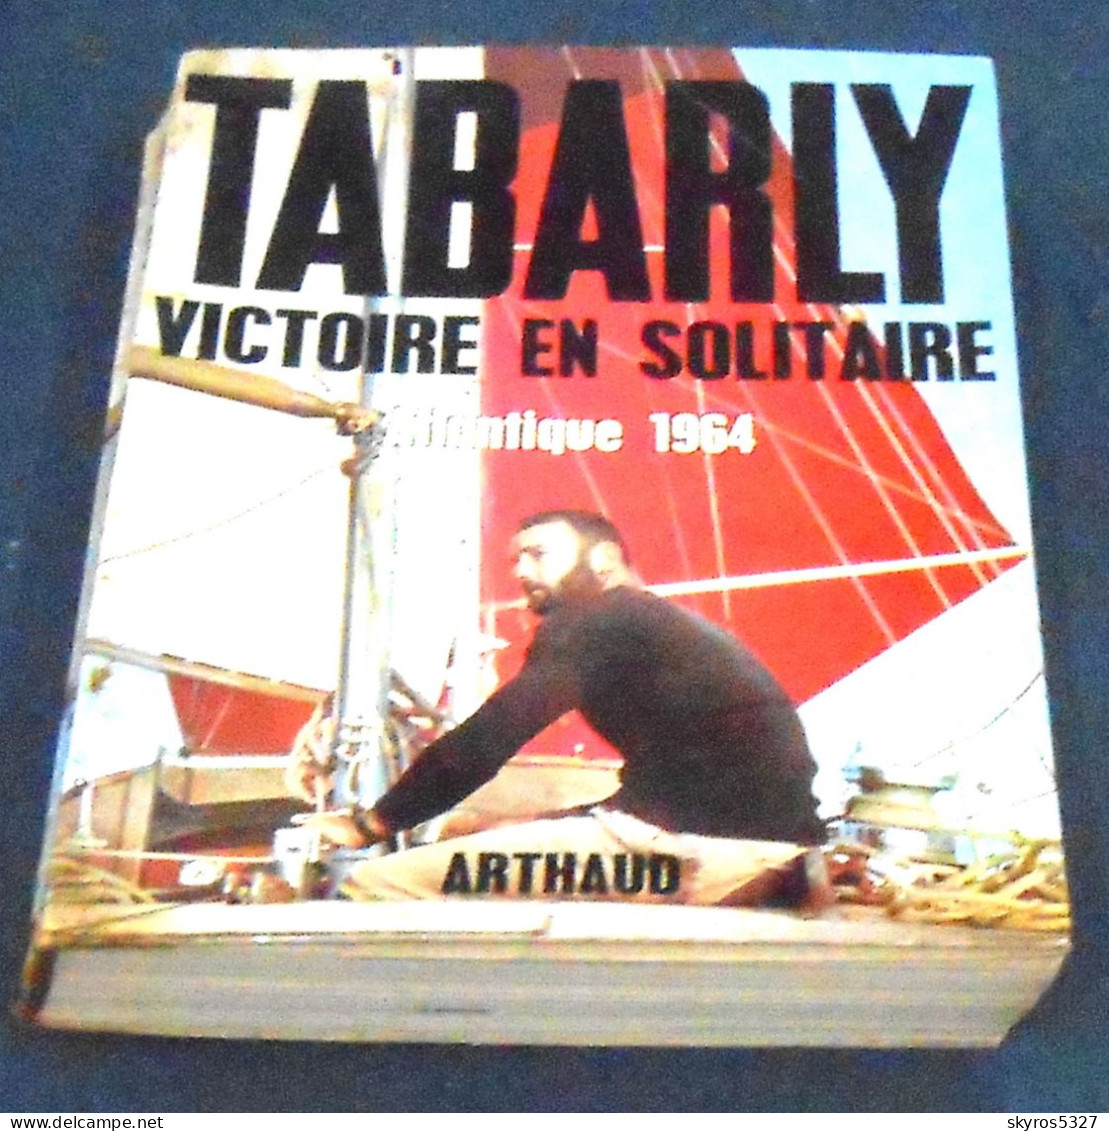 Victoire En Solitaire Atlantique 1964 - Eric Tabarly - Boten